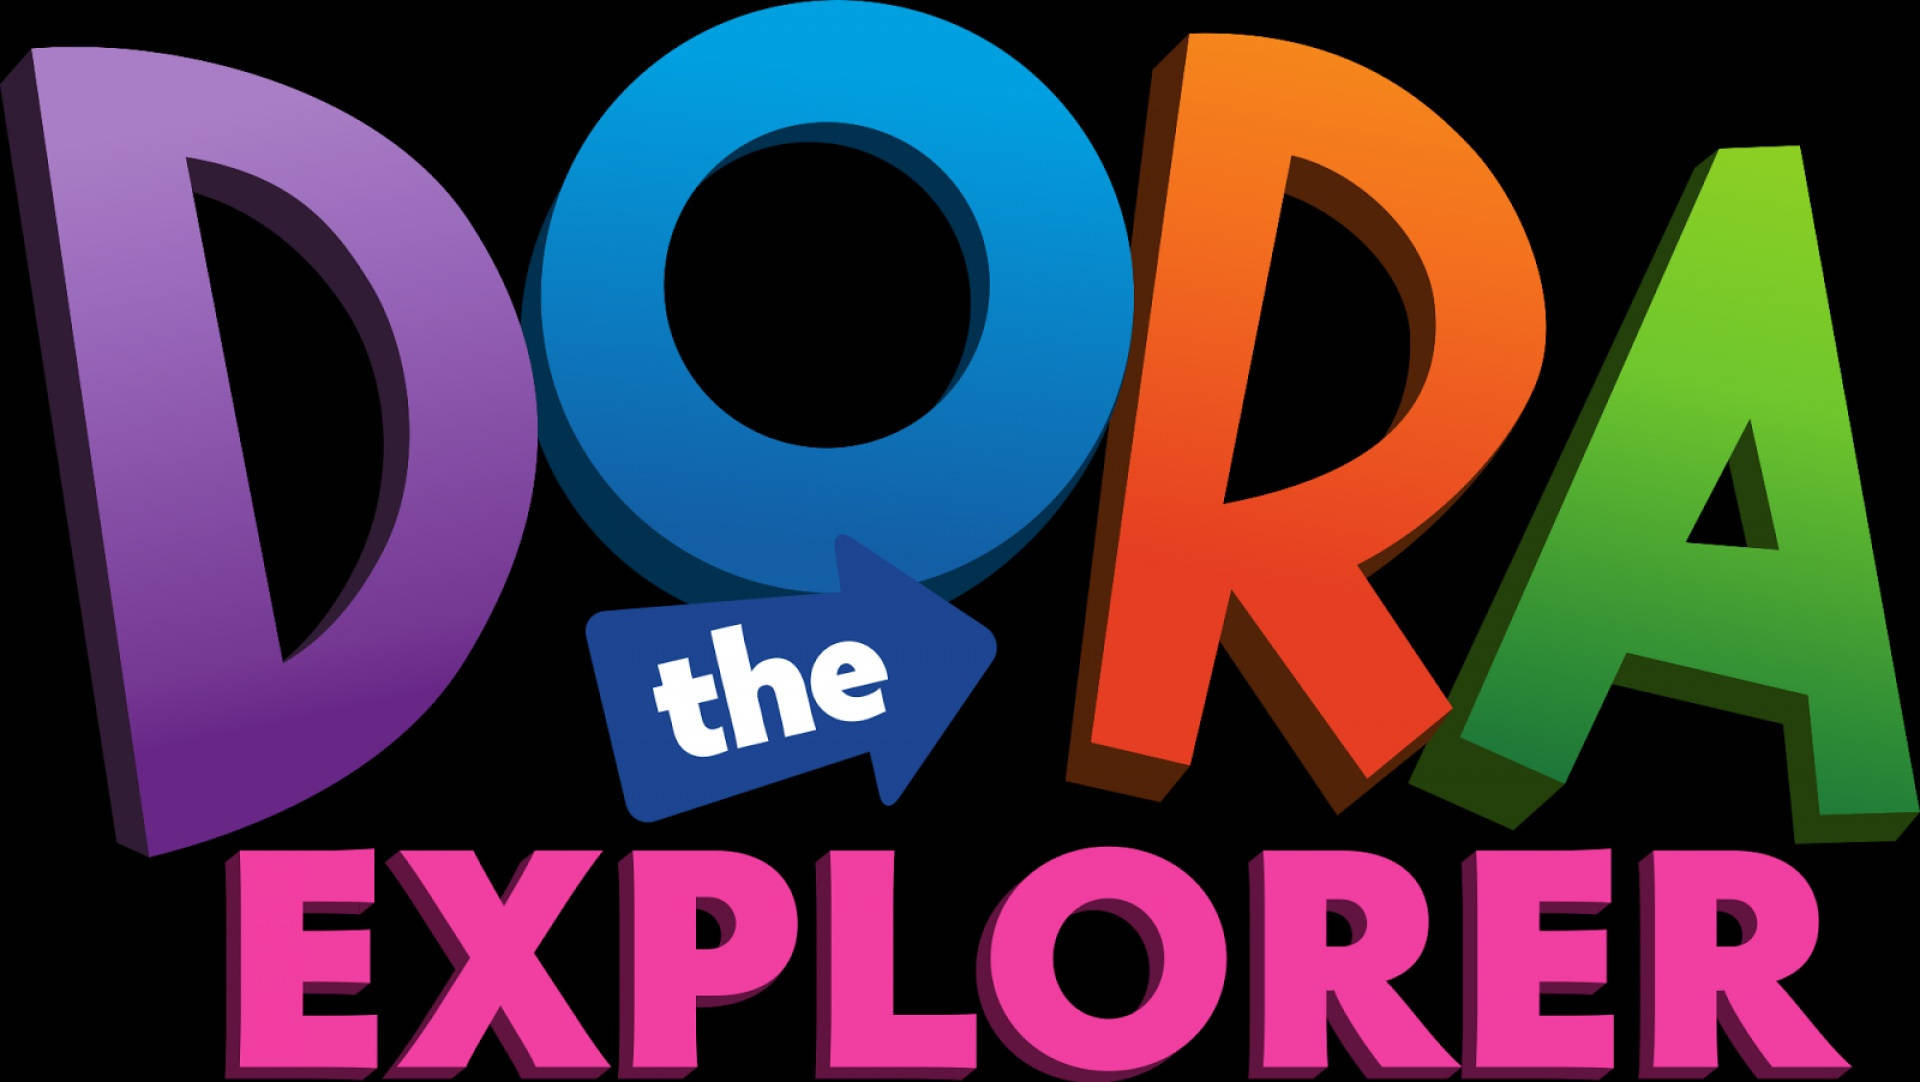 Dora The Explorer Logo Wallpaper